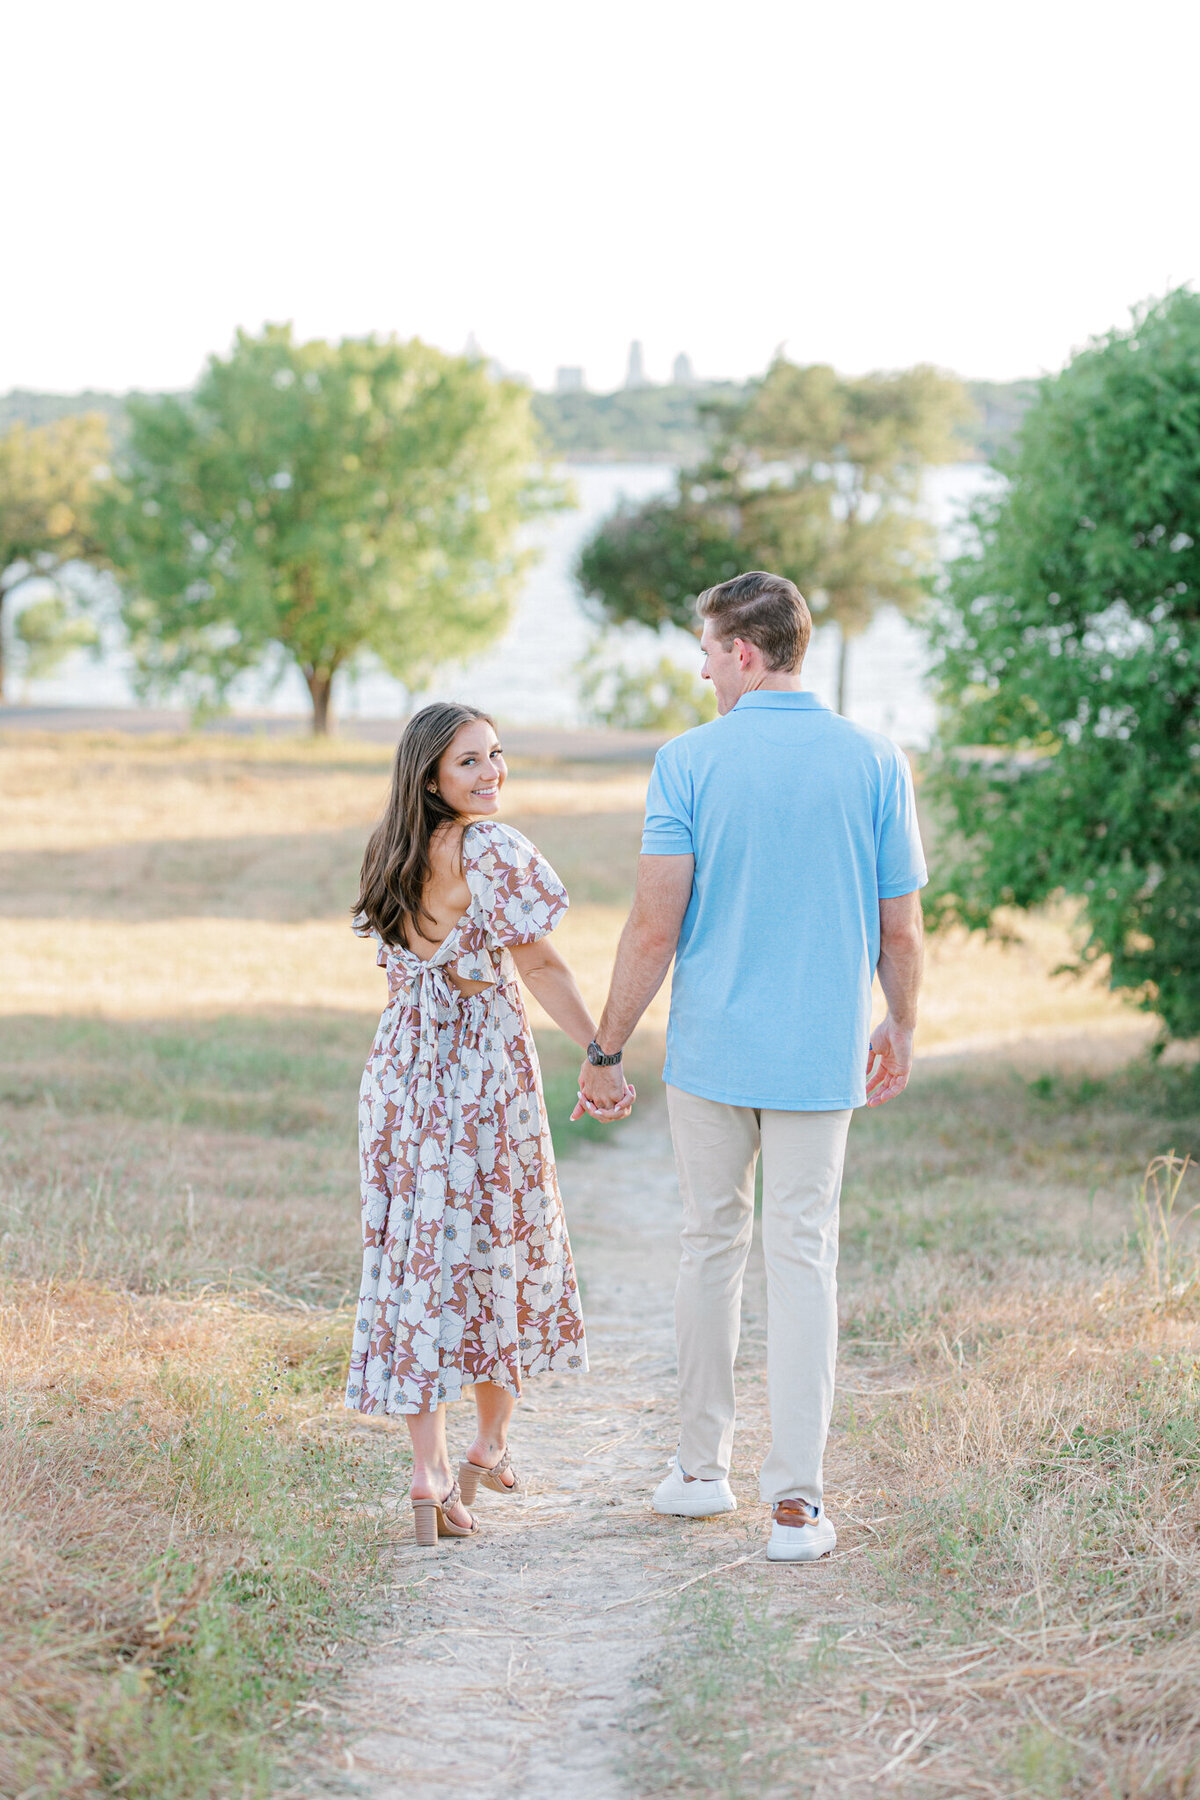 Allie & Nolan's Engagement Session at White Rock Lake | Dallas Wedding Photographer | Sami Kathryn Photography-4